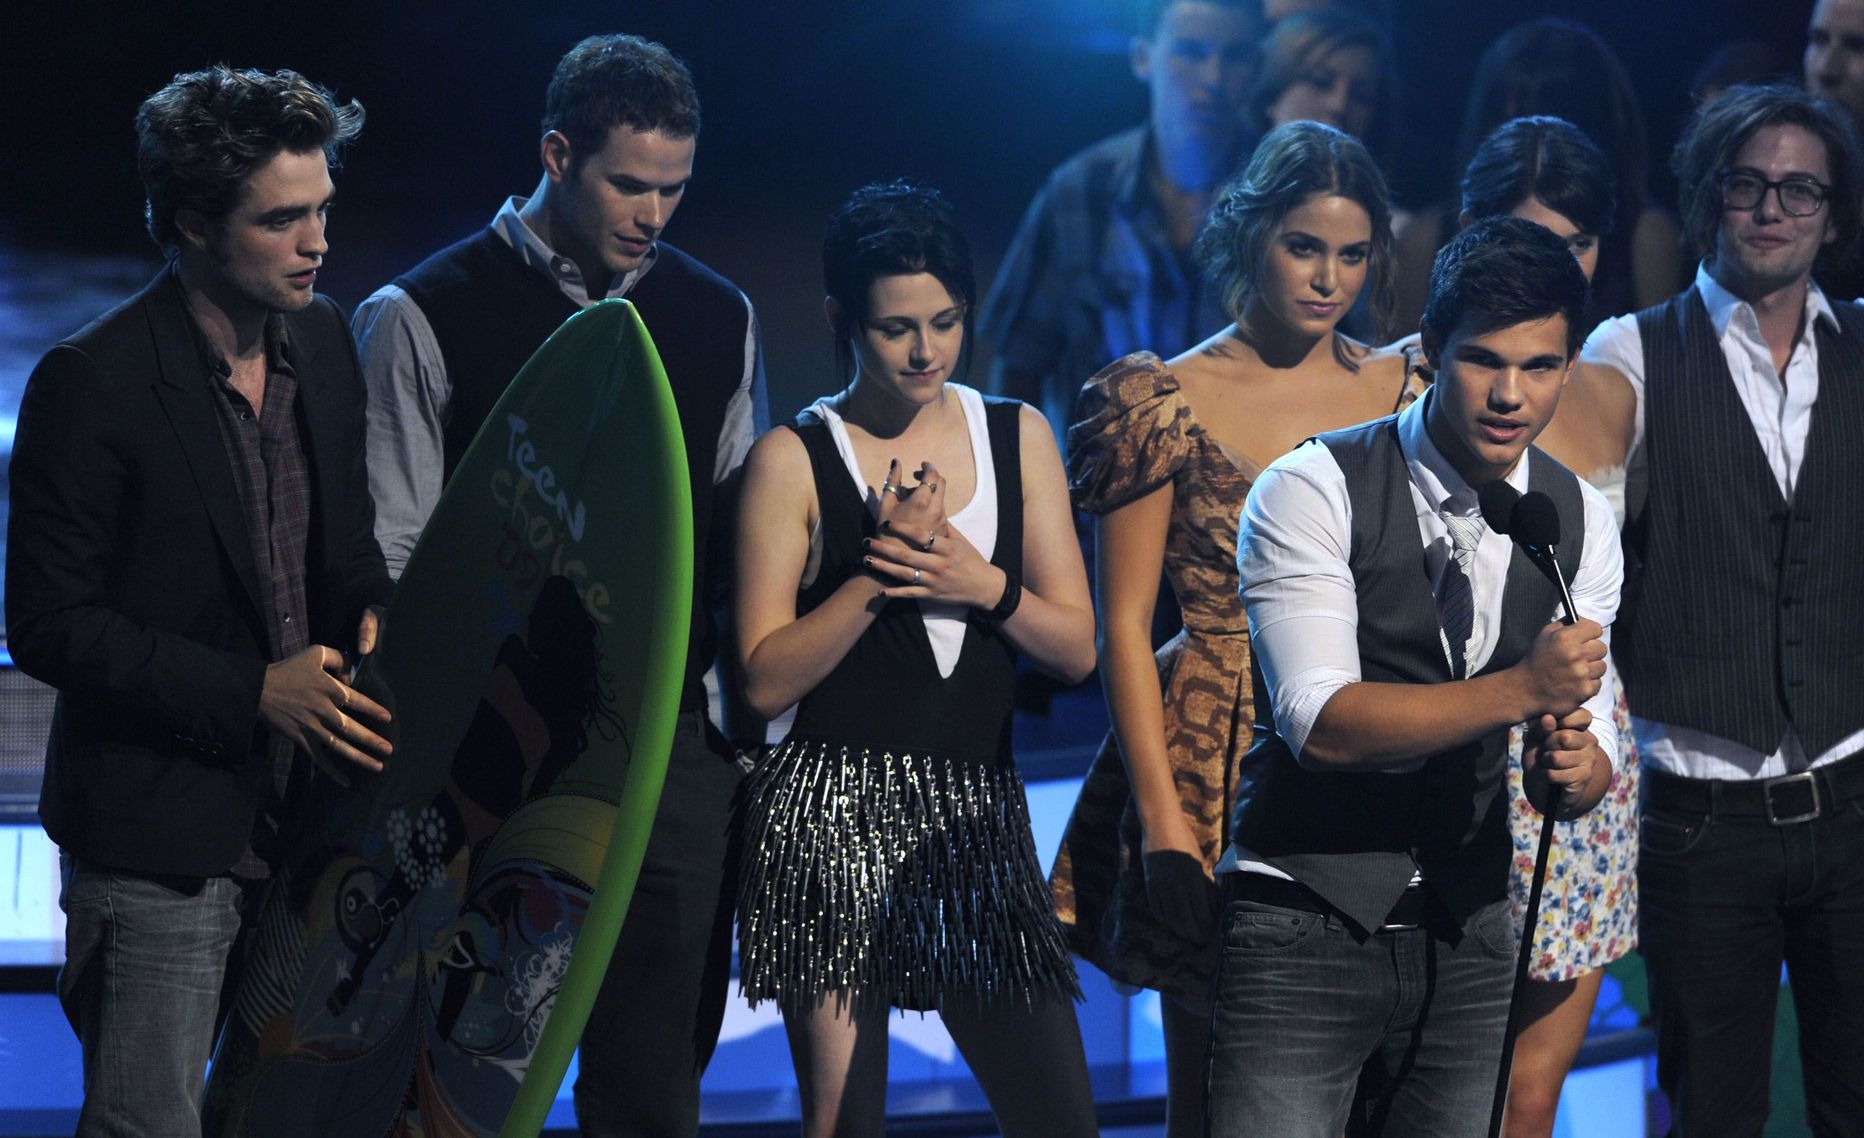 "Videvik" korjas Teen Choice Awards auhinnagalal 11 auhinda